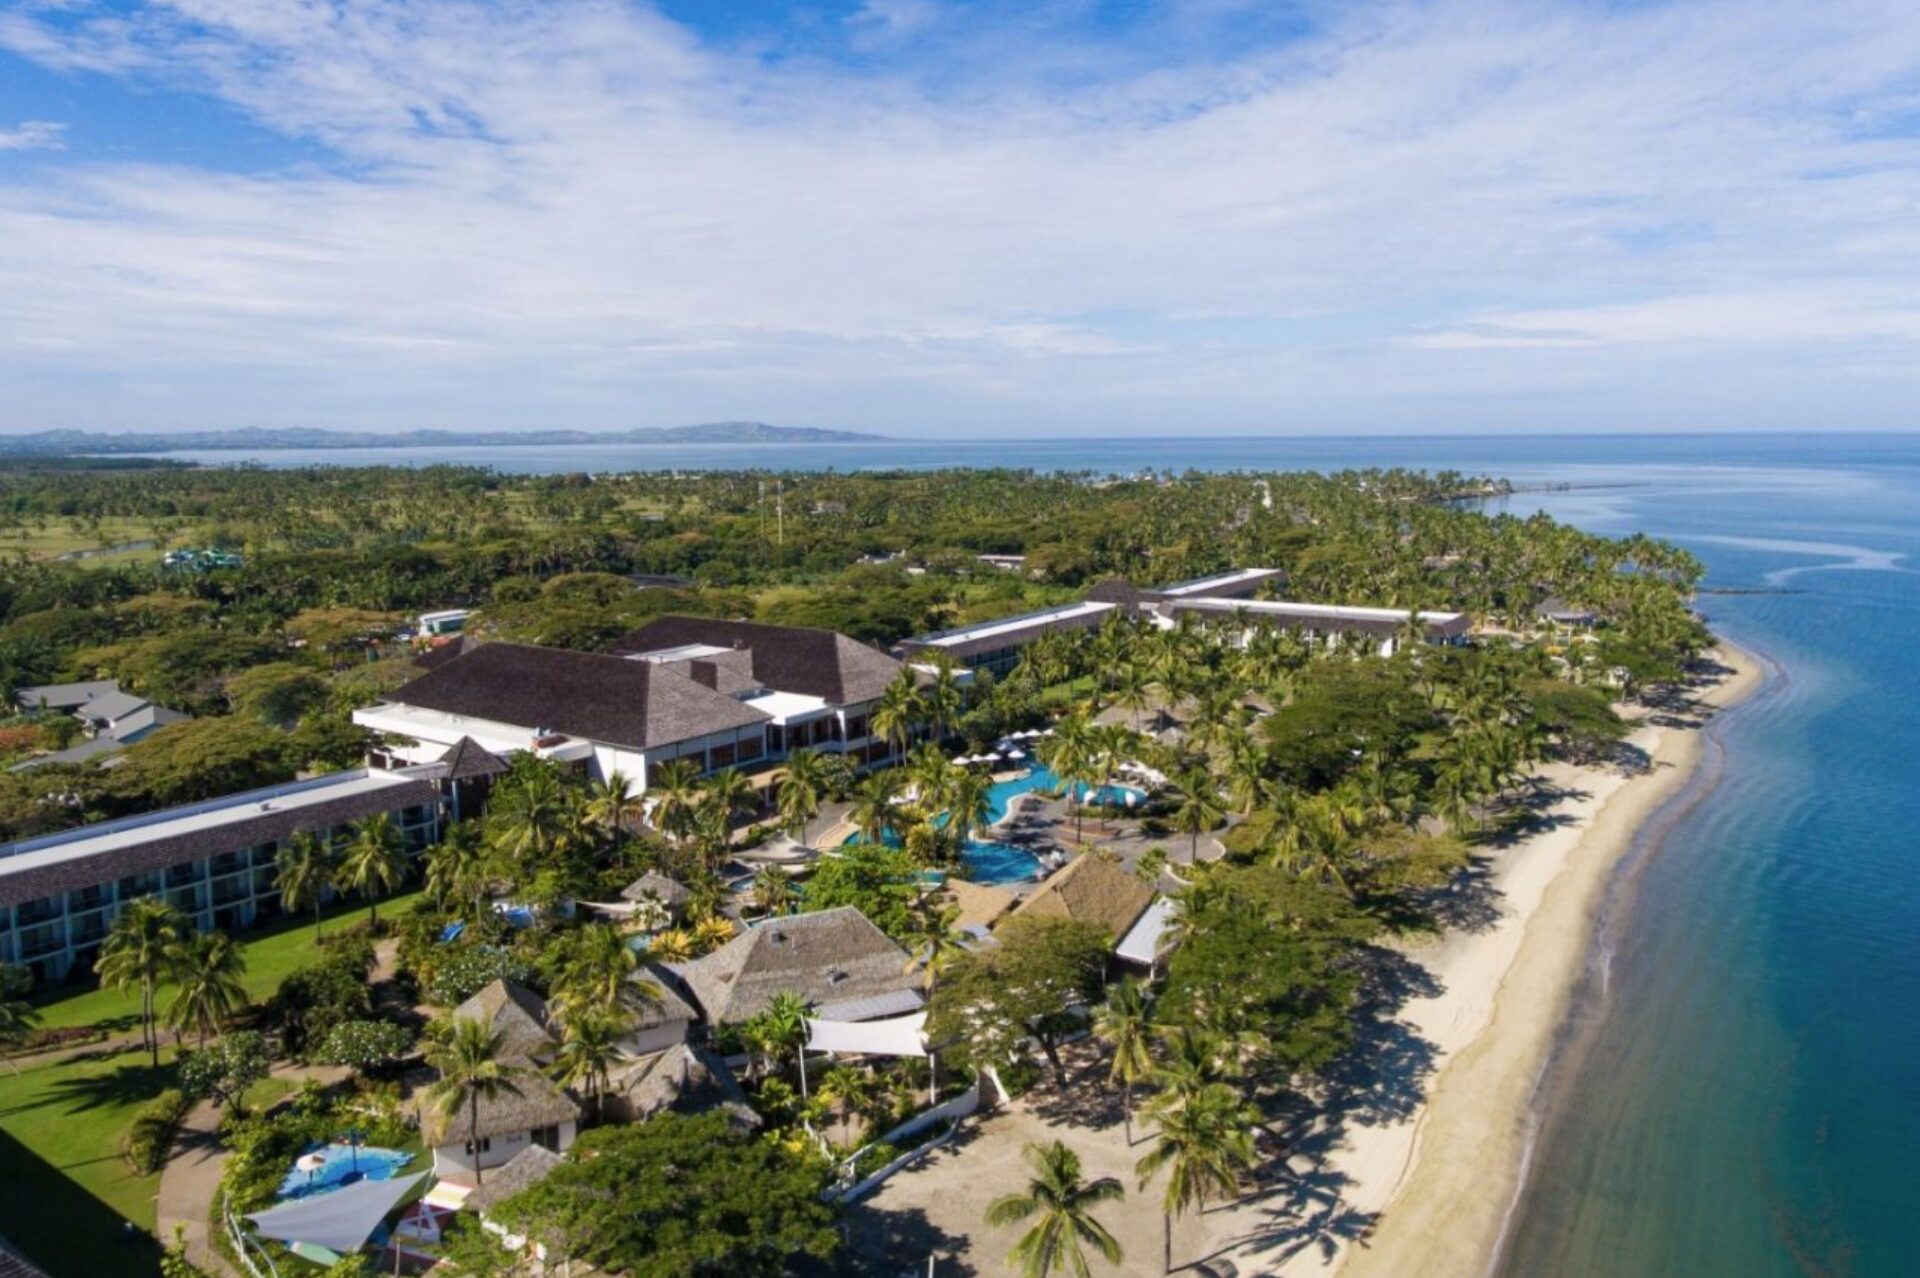 Sofitel Resort Spa in Fiji makes You feel Tropically French